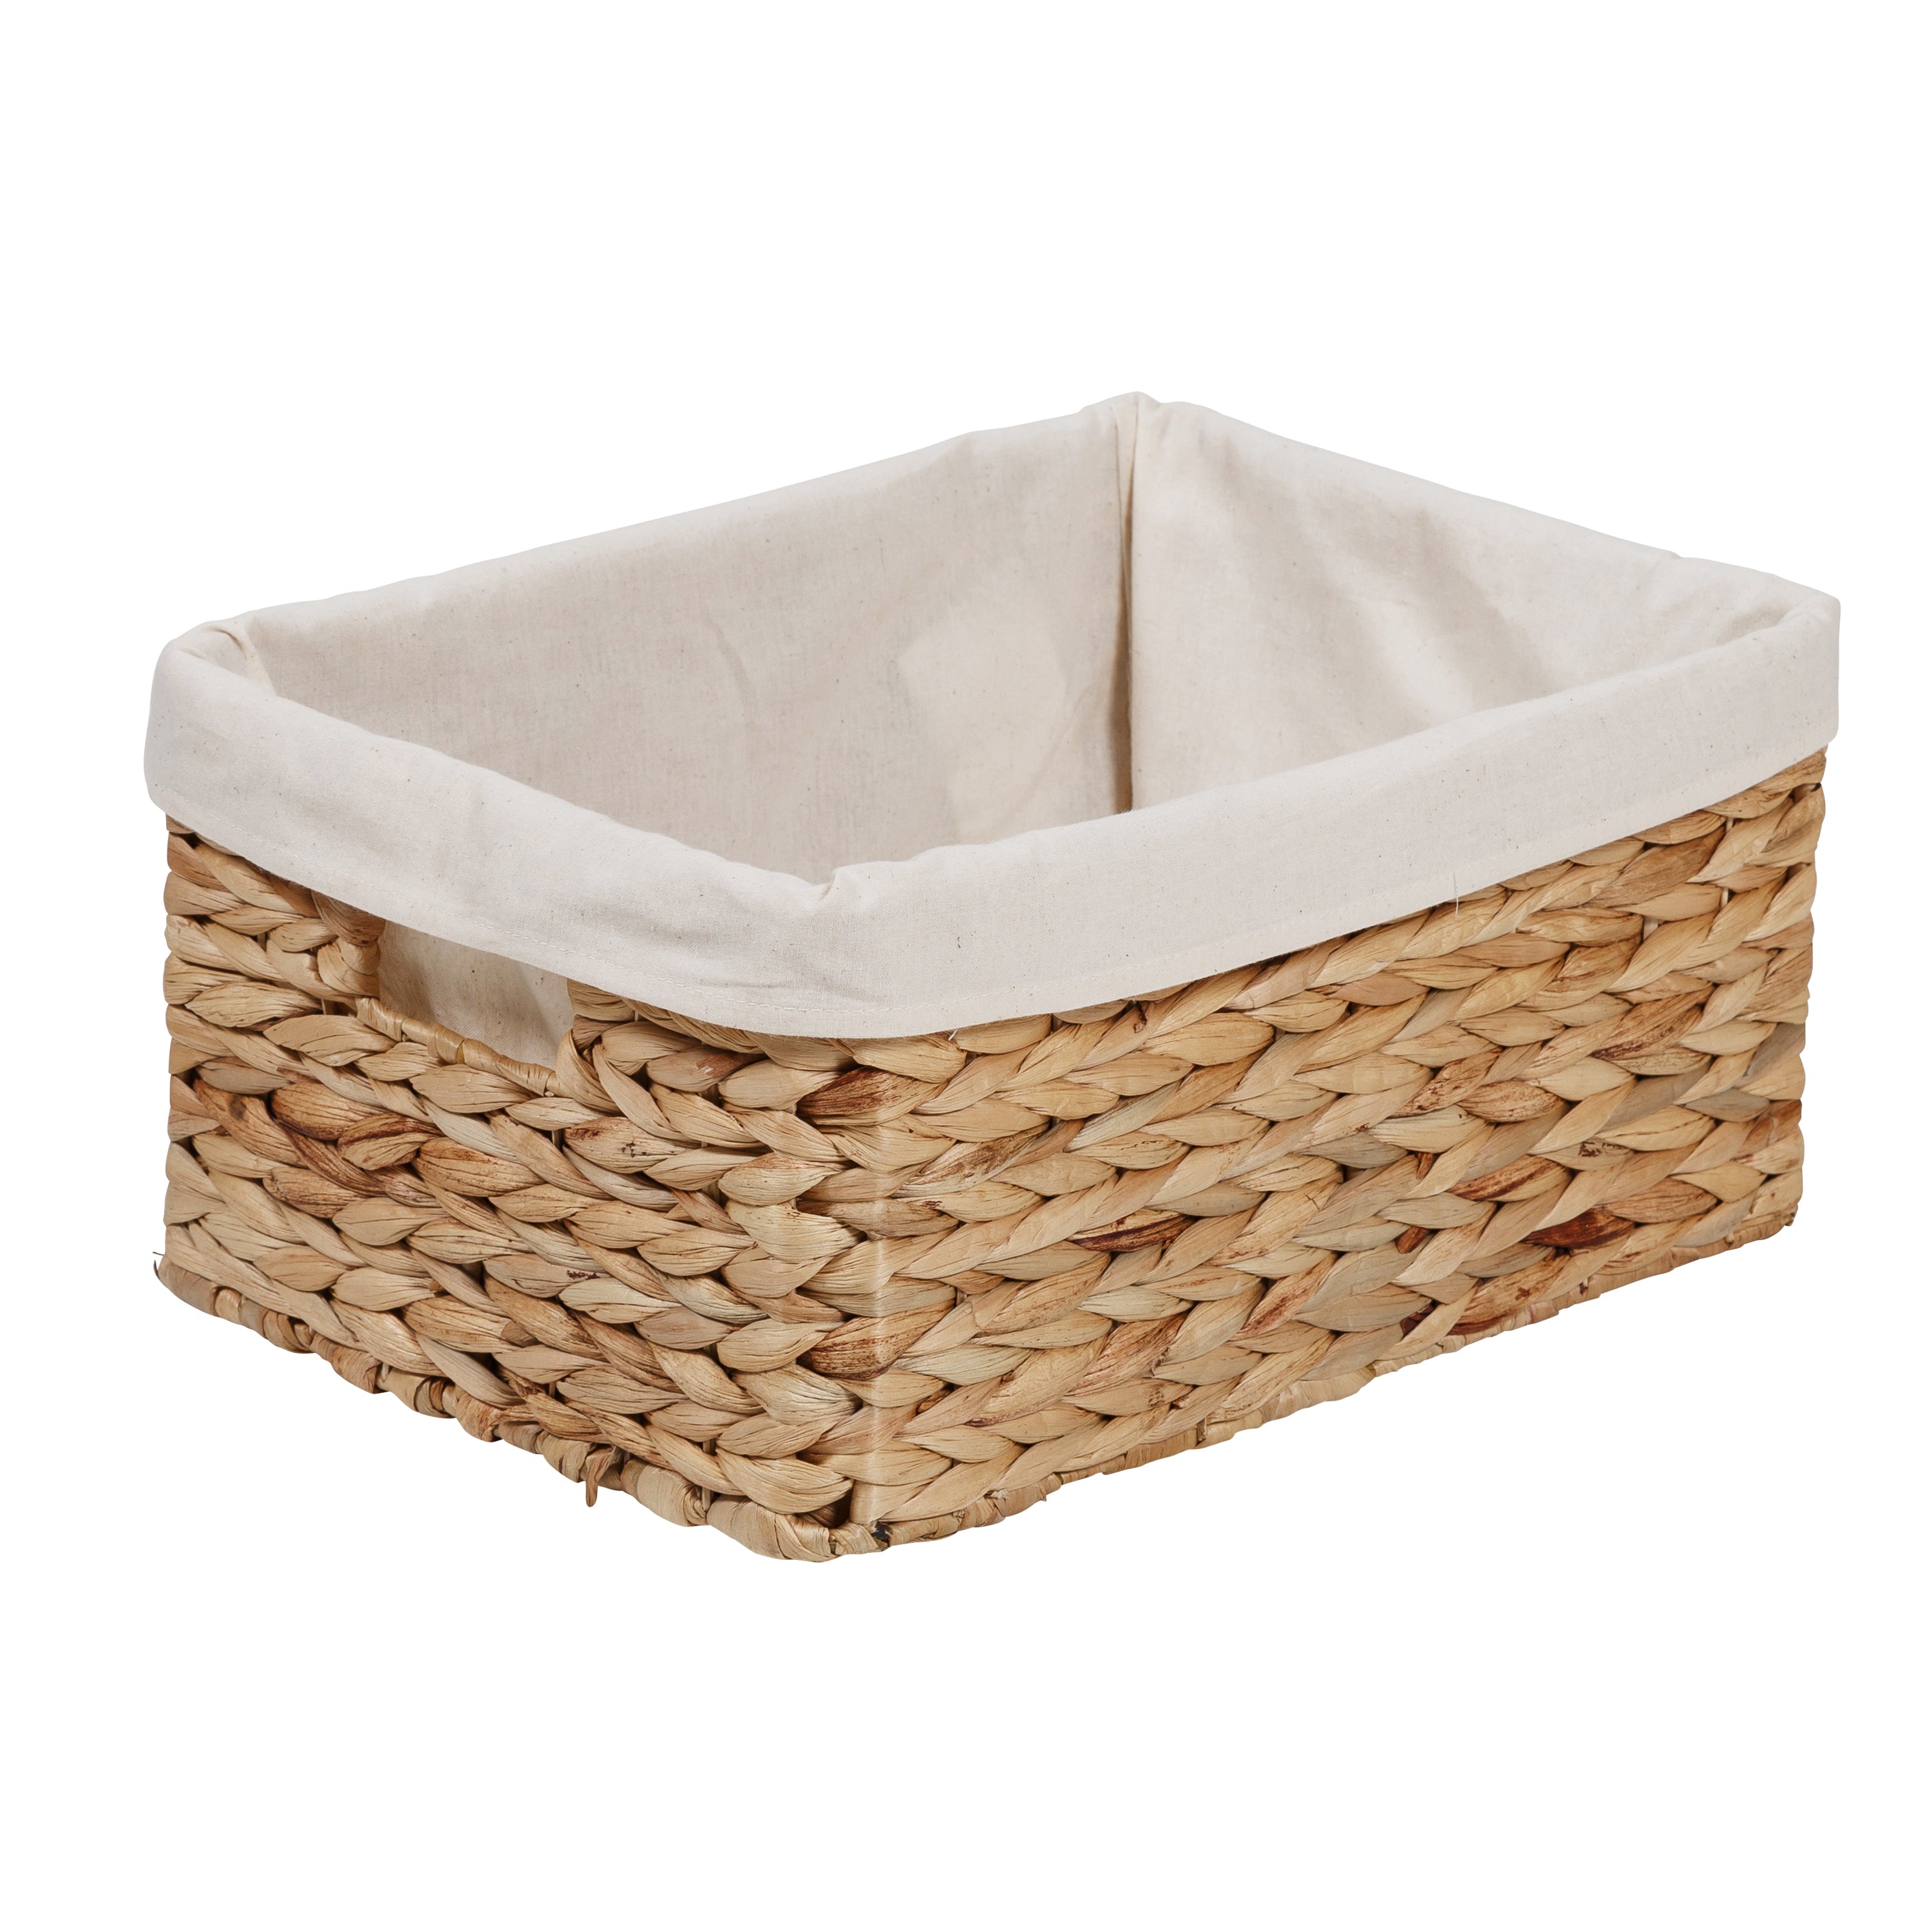 mDesign Water Hyacinth 3-Tiered Storage Baskets Floor Stand - White/Natural  